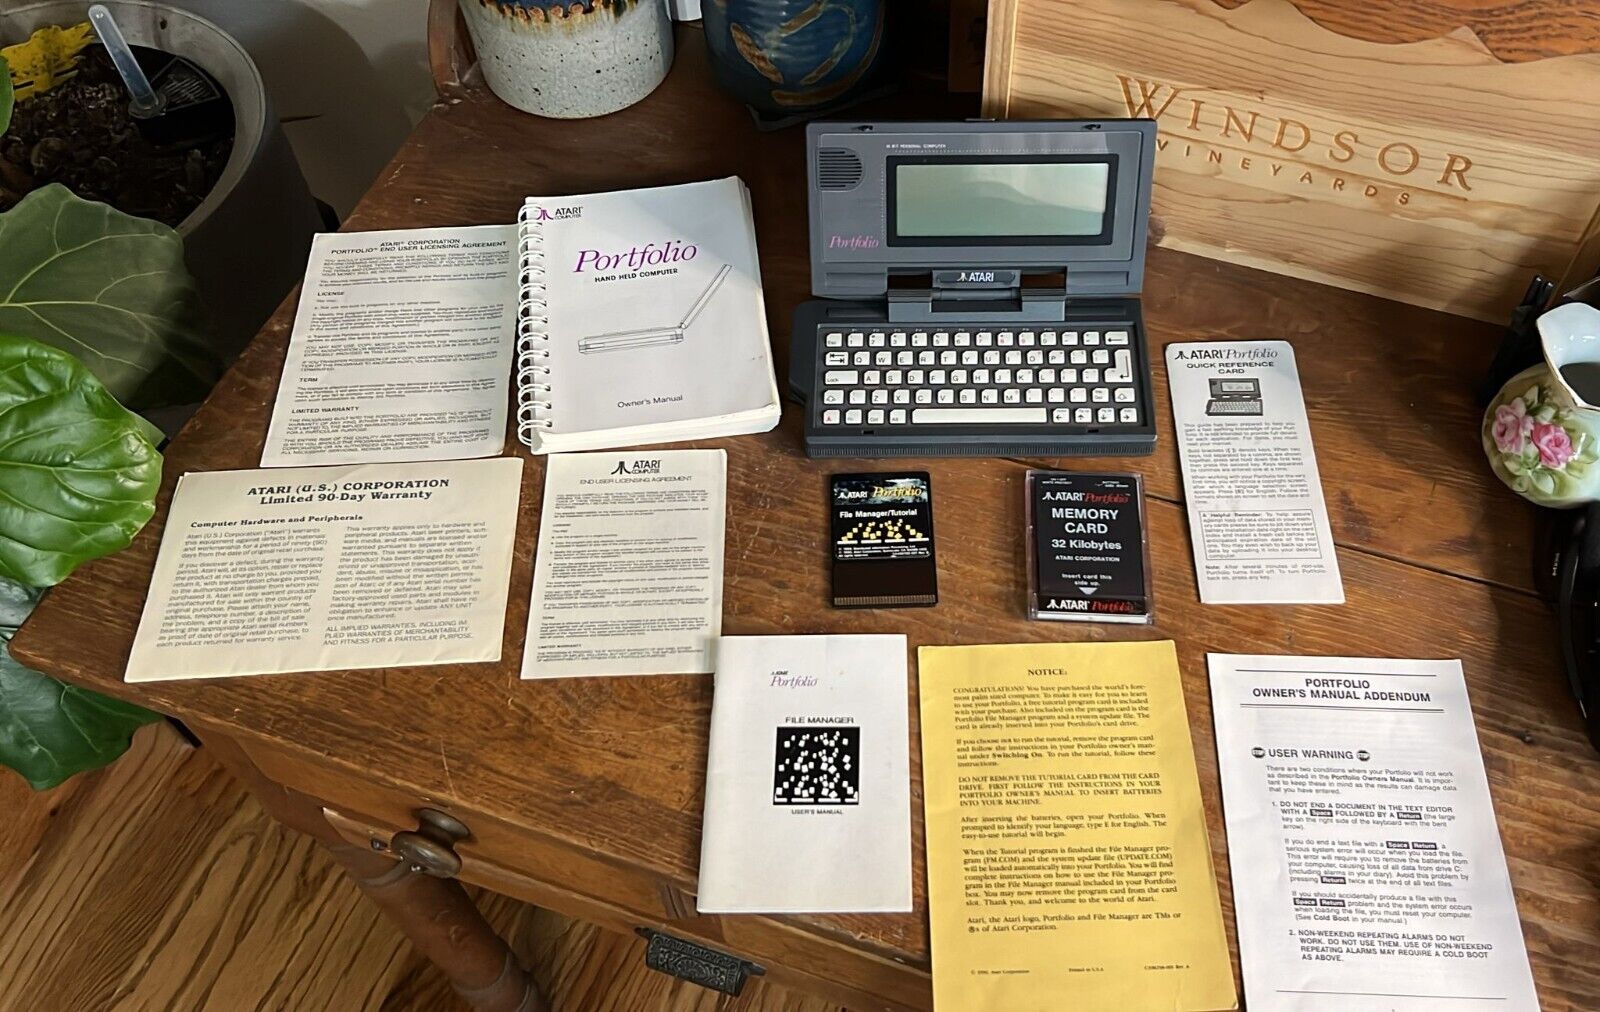 Atari Portfolio  HPC-004 Computer Vintage Mini Computer - Tested And Working